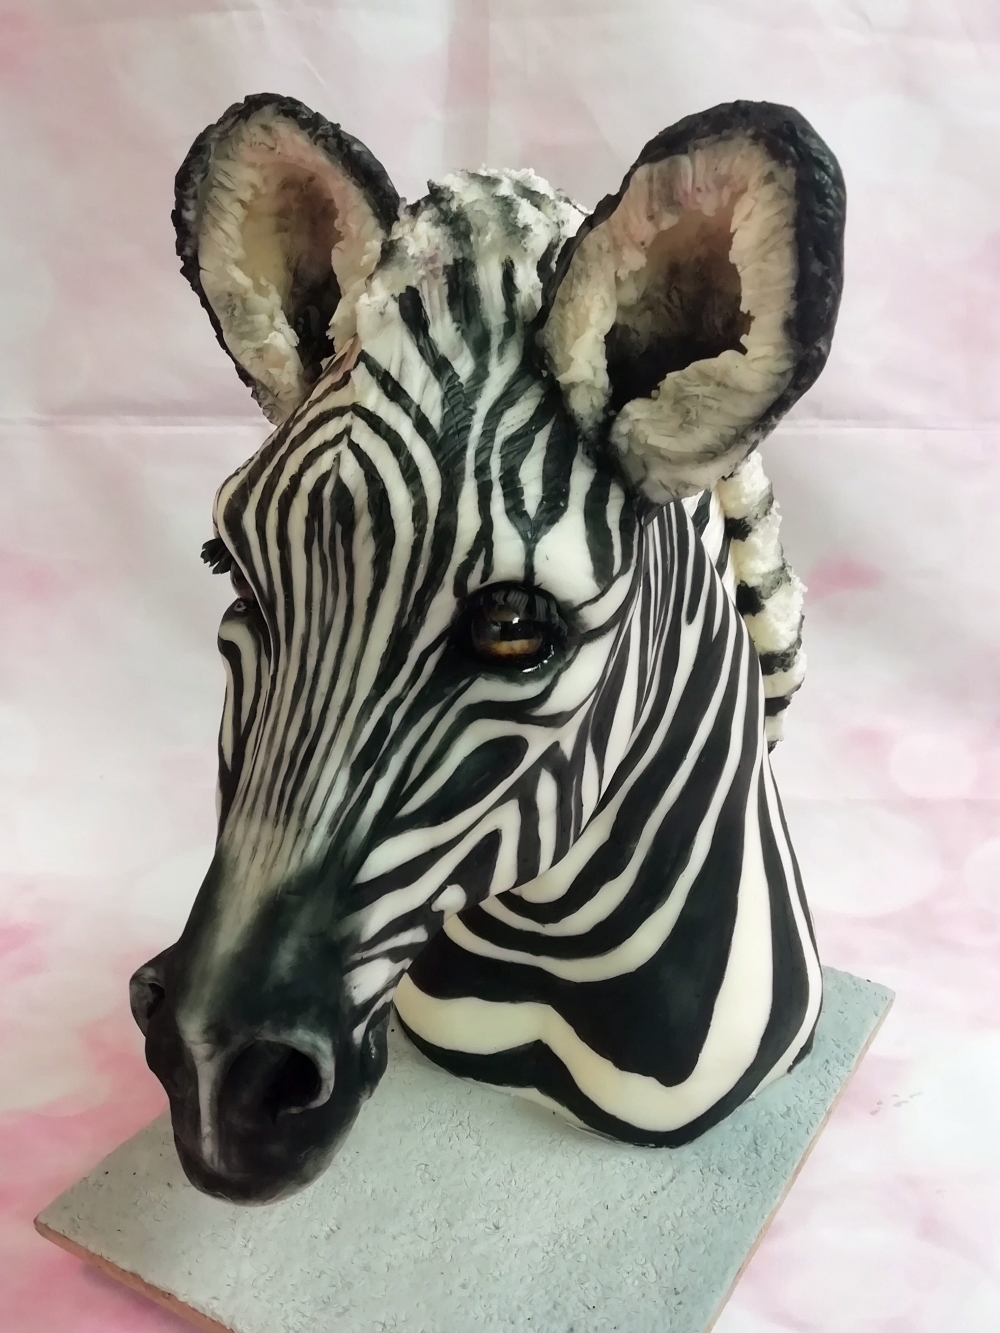 Really awesome: Zebra-cake